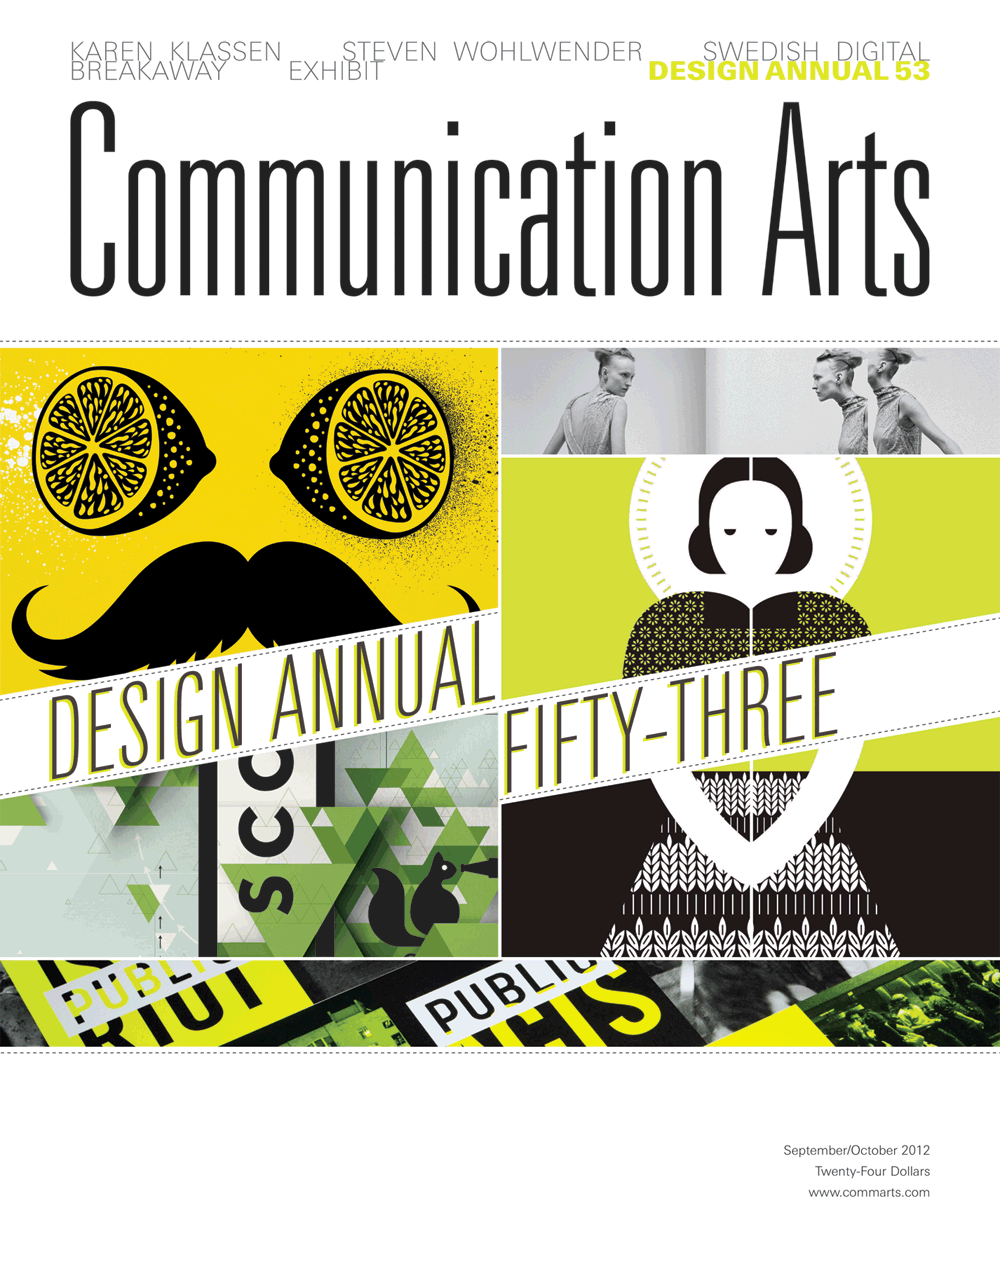 Communication Arts magazine: Cover, Sept/Oct 2012